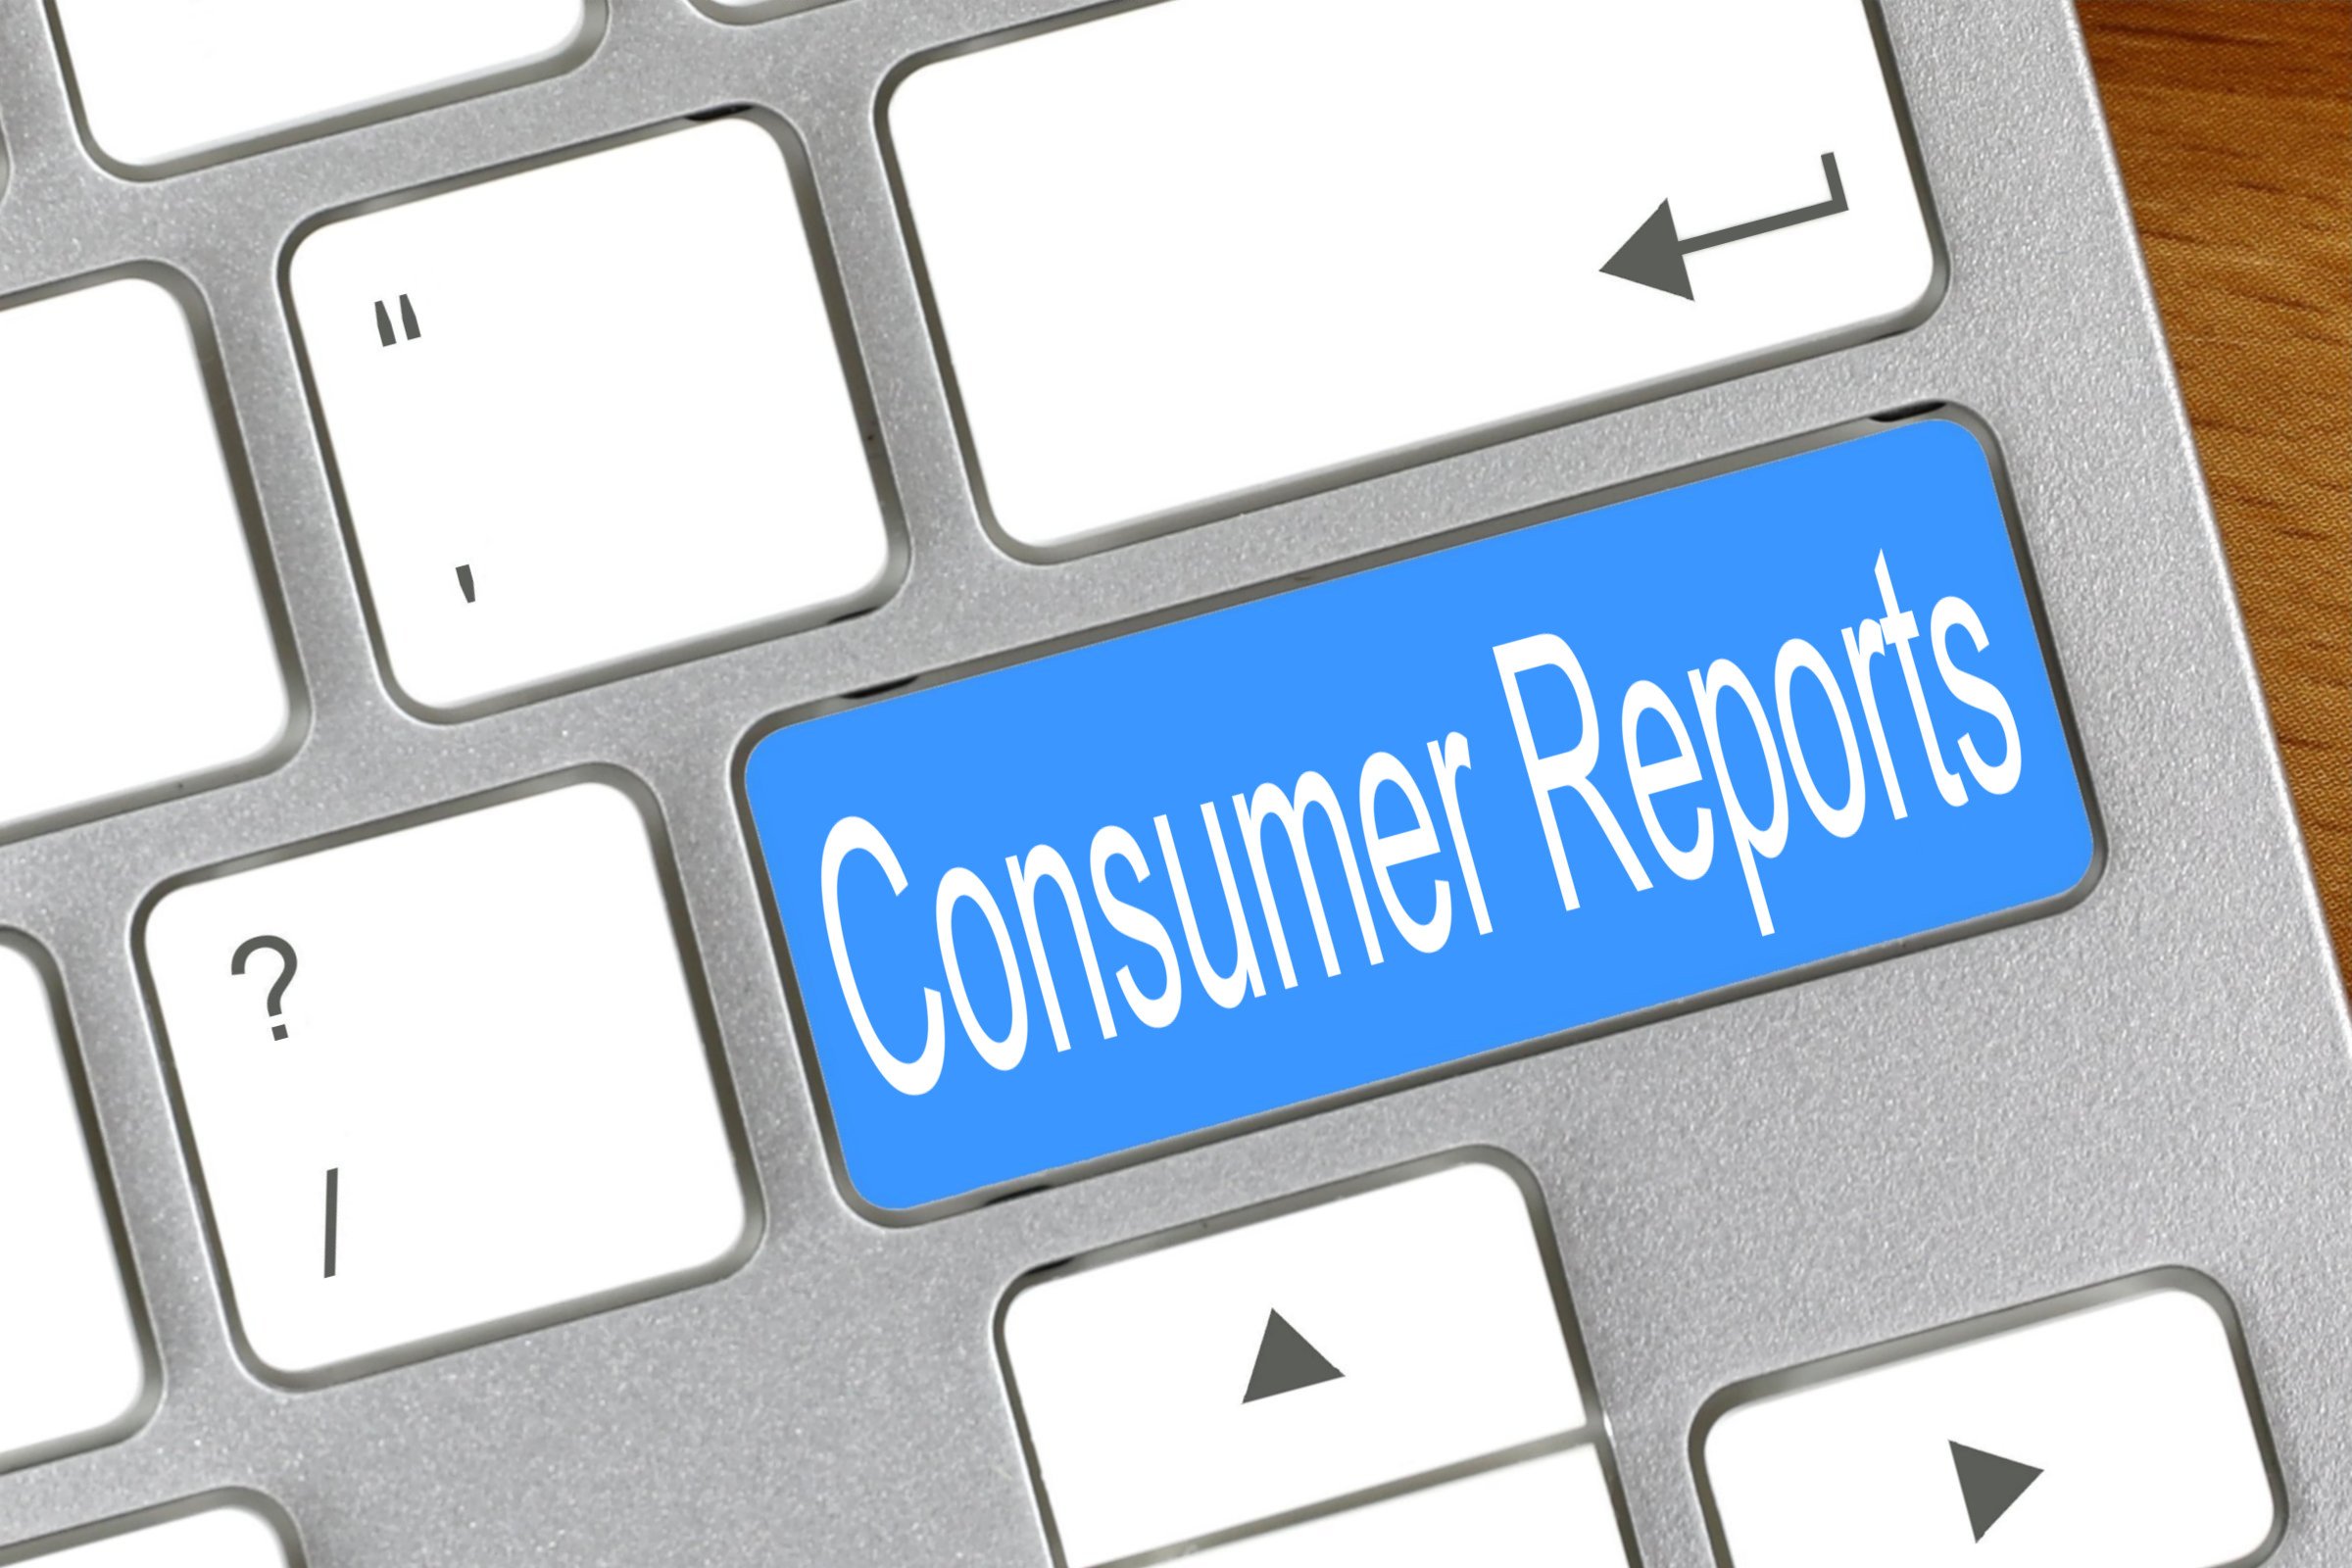 consumer reports